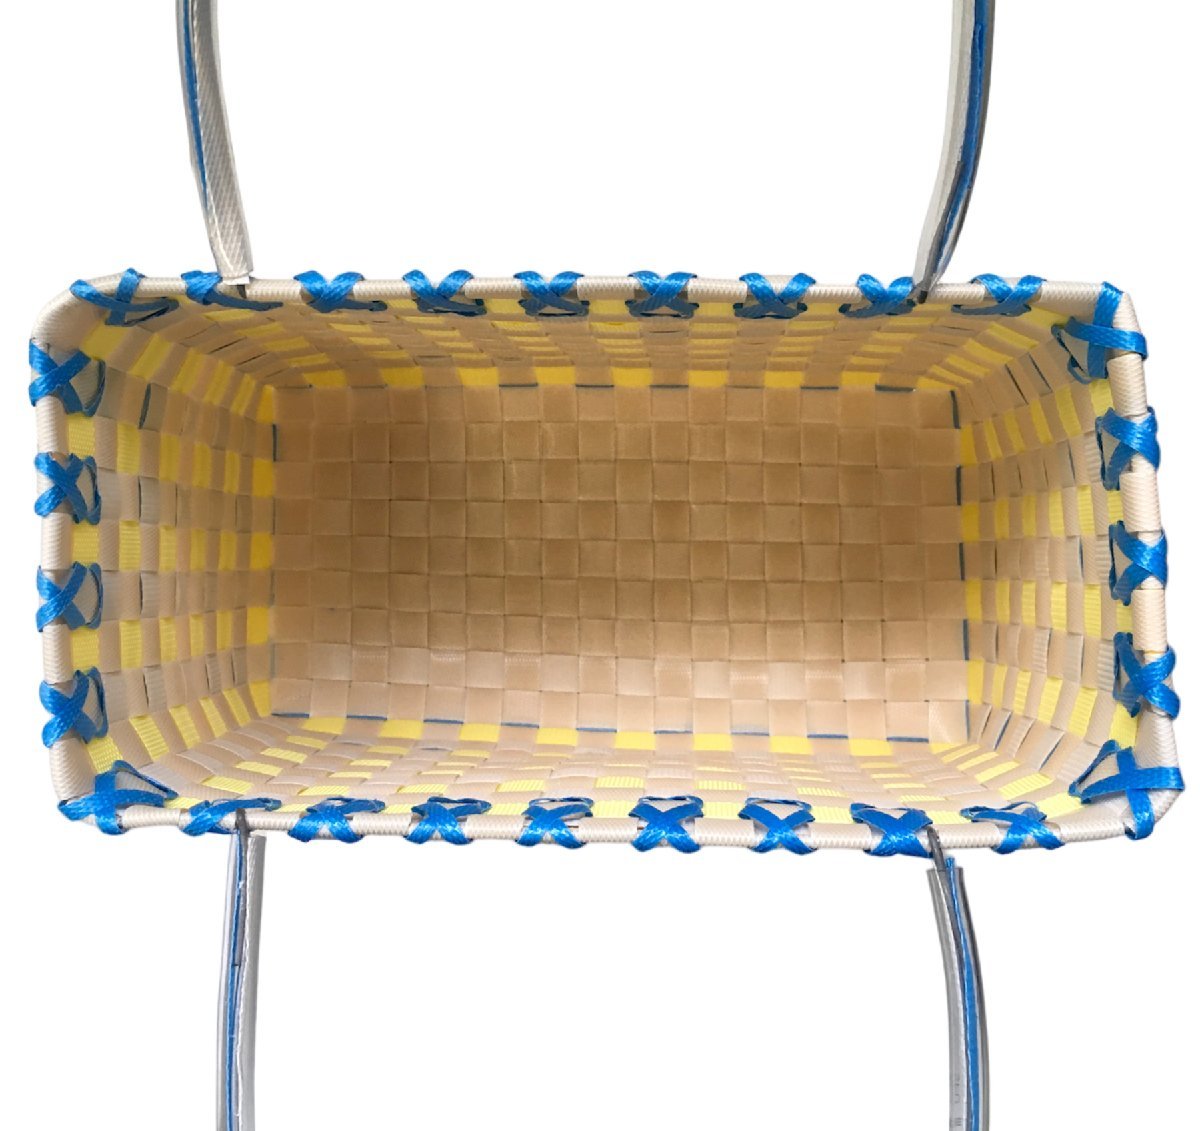  basket smaller hand-knitted .PP band basket basket handmade PP basket 1 blue × beige × yellow 